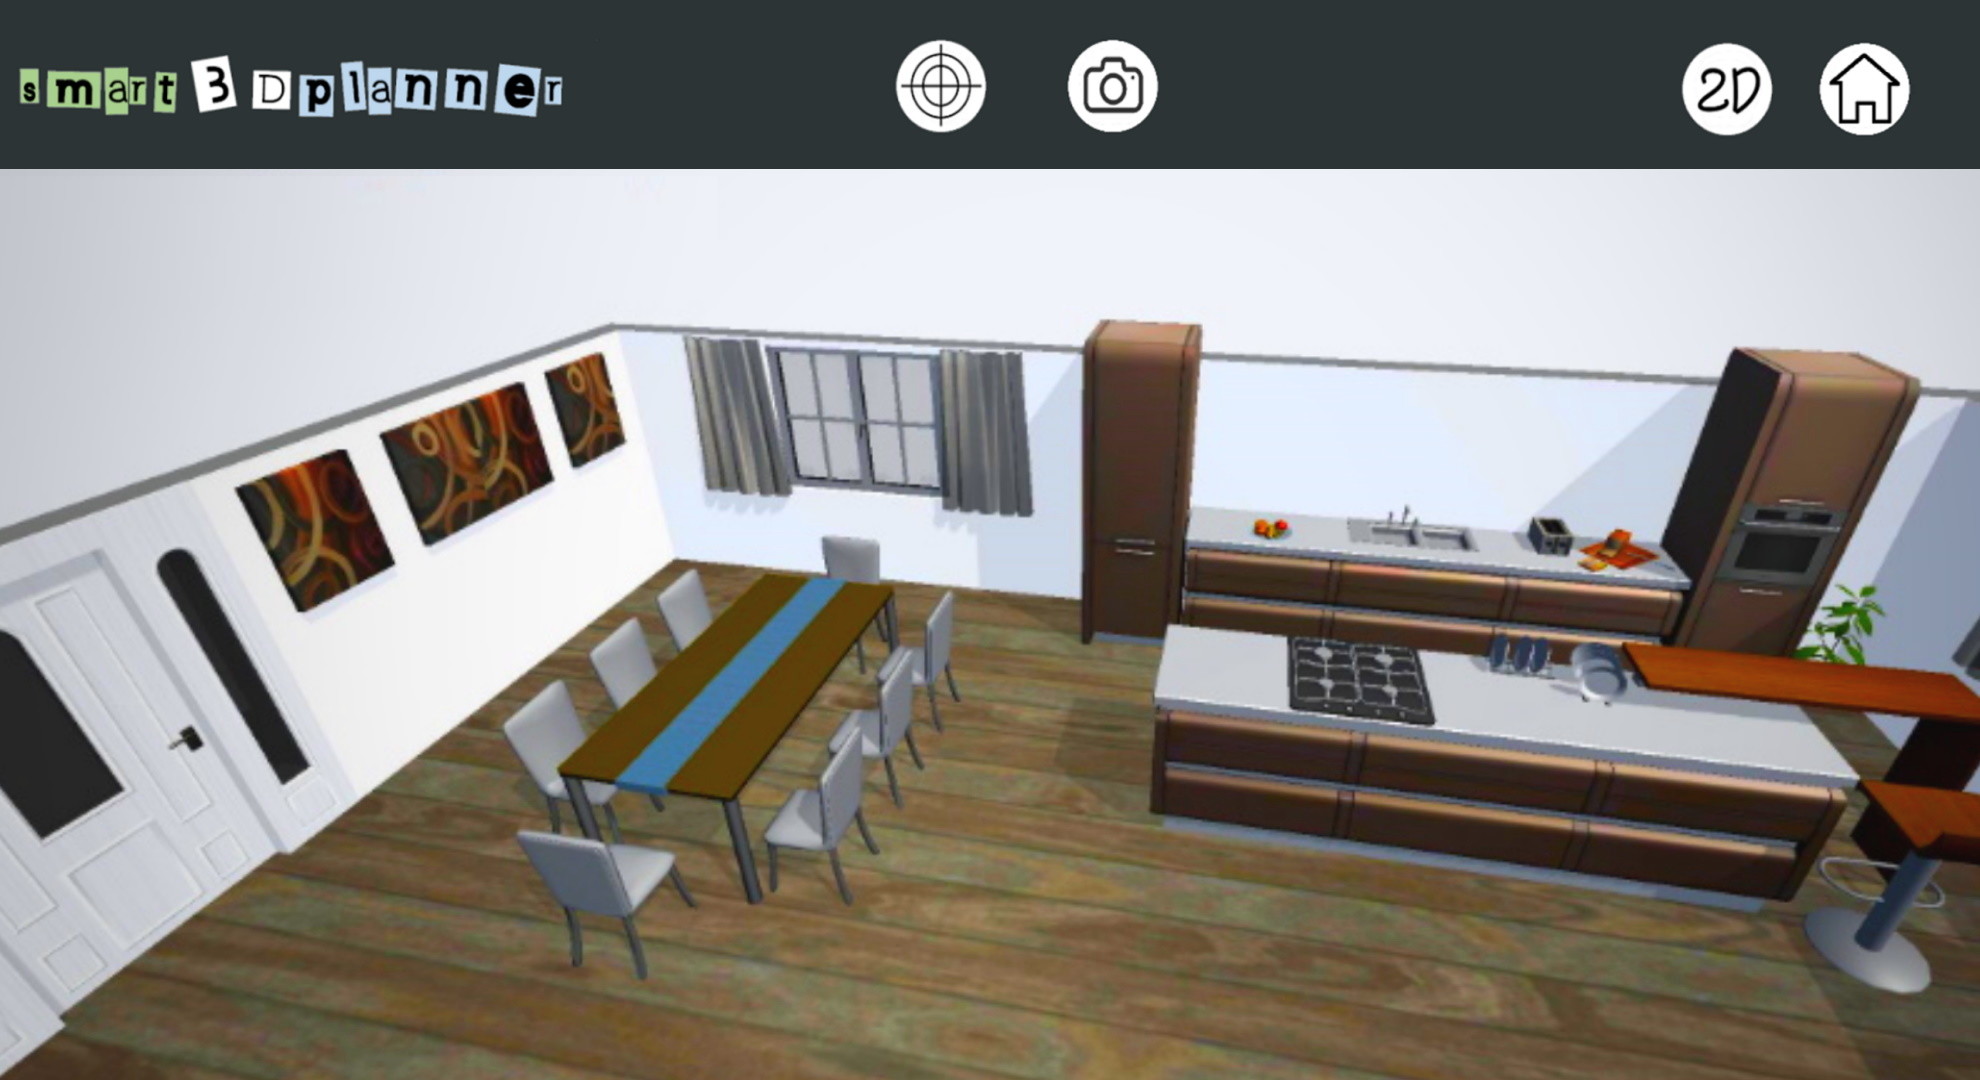 smart3Dplanner screenshot